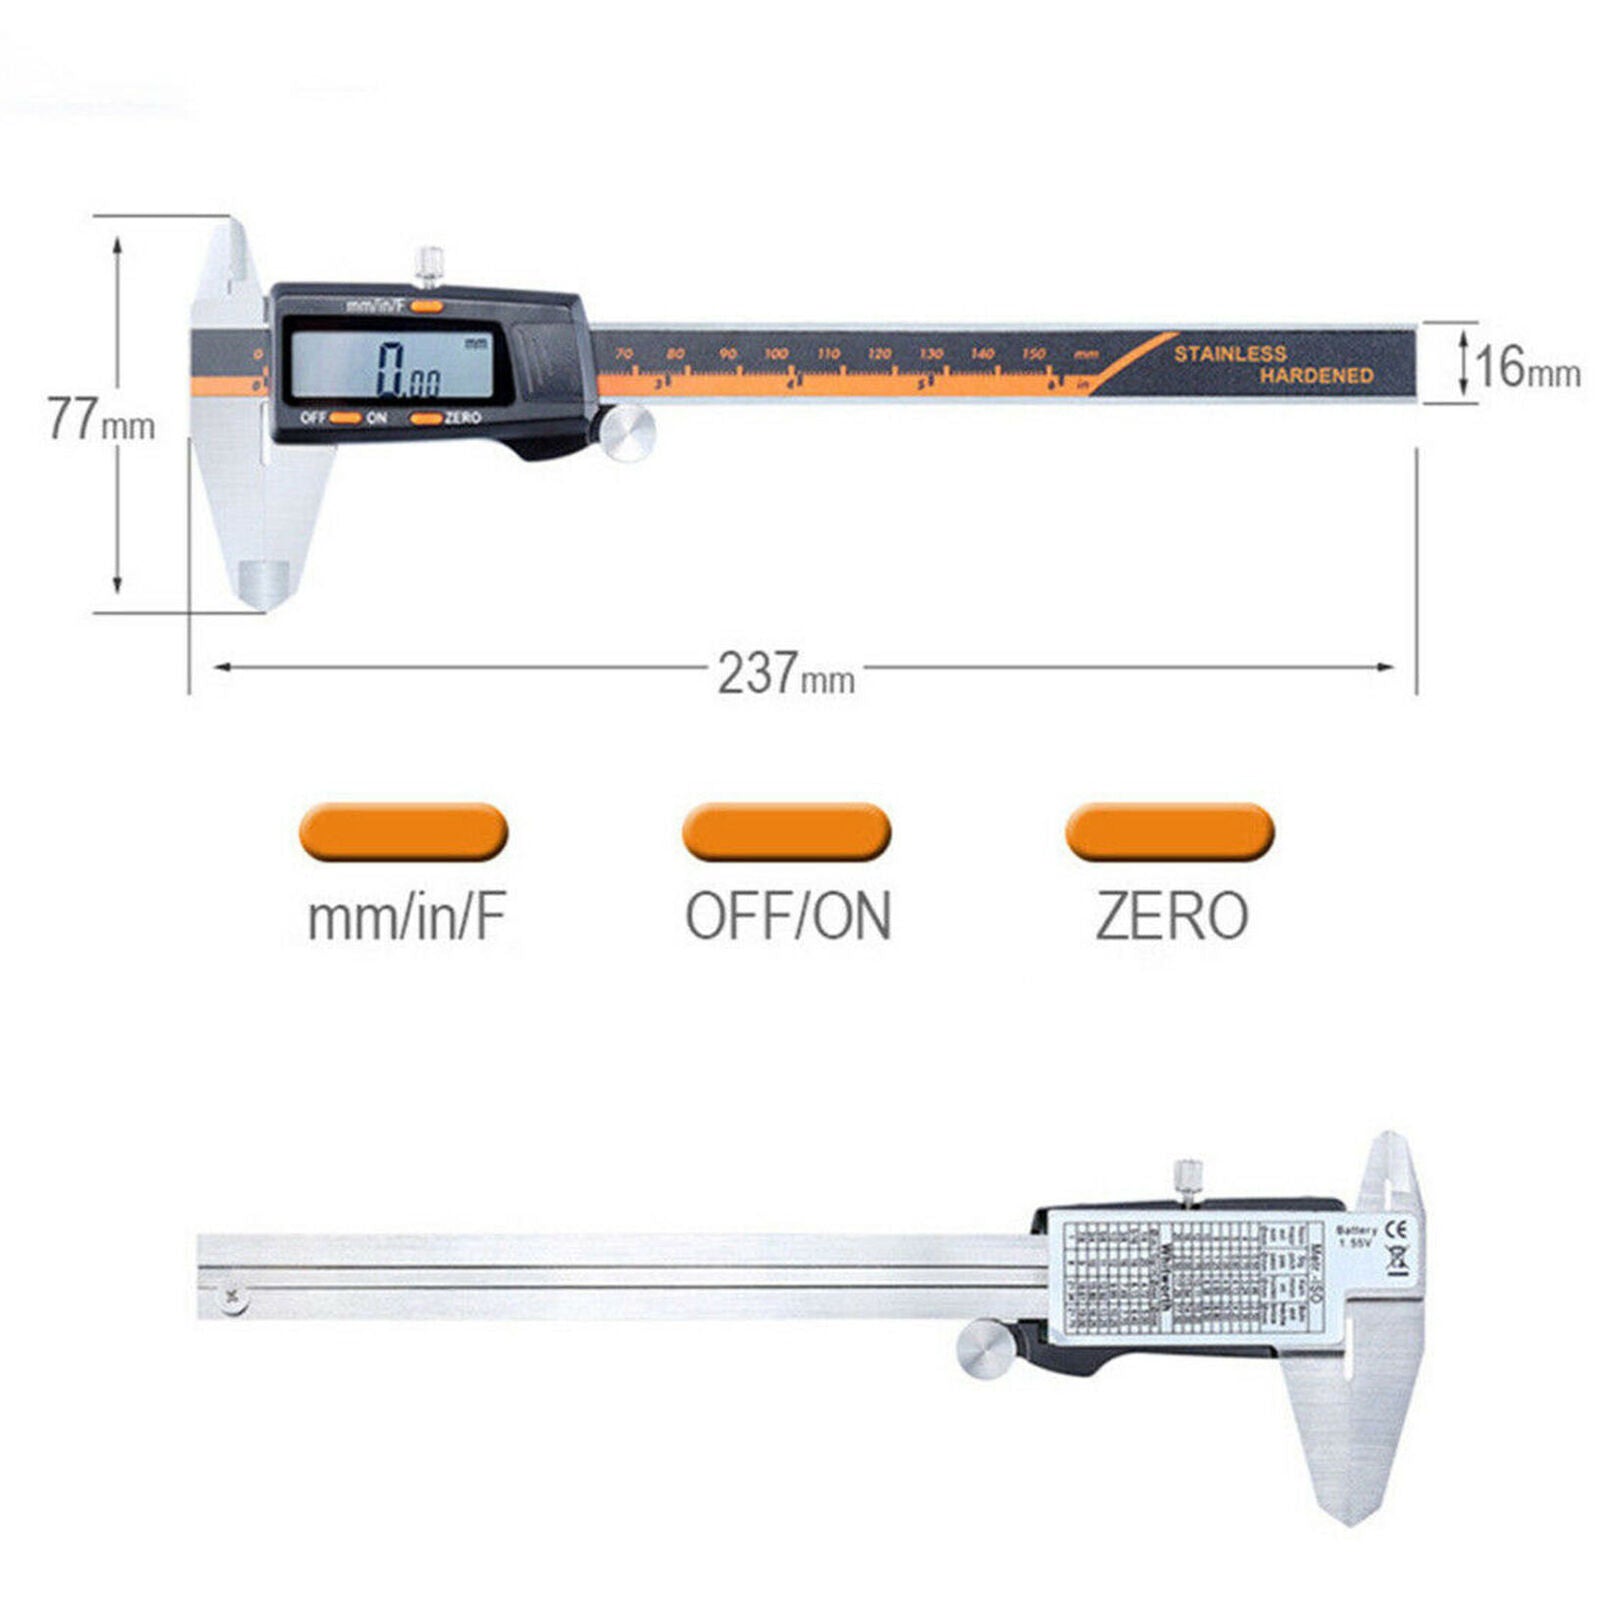 0-150mm Stainless Steel Electronic Digital LCD Vernier Caliper Gauge Micrometer